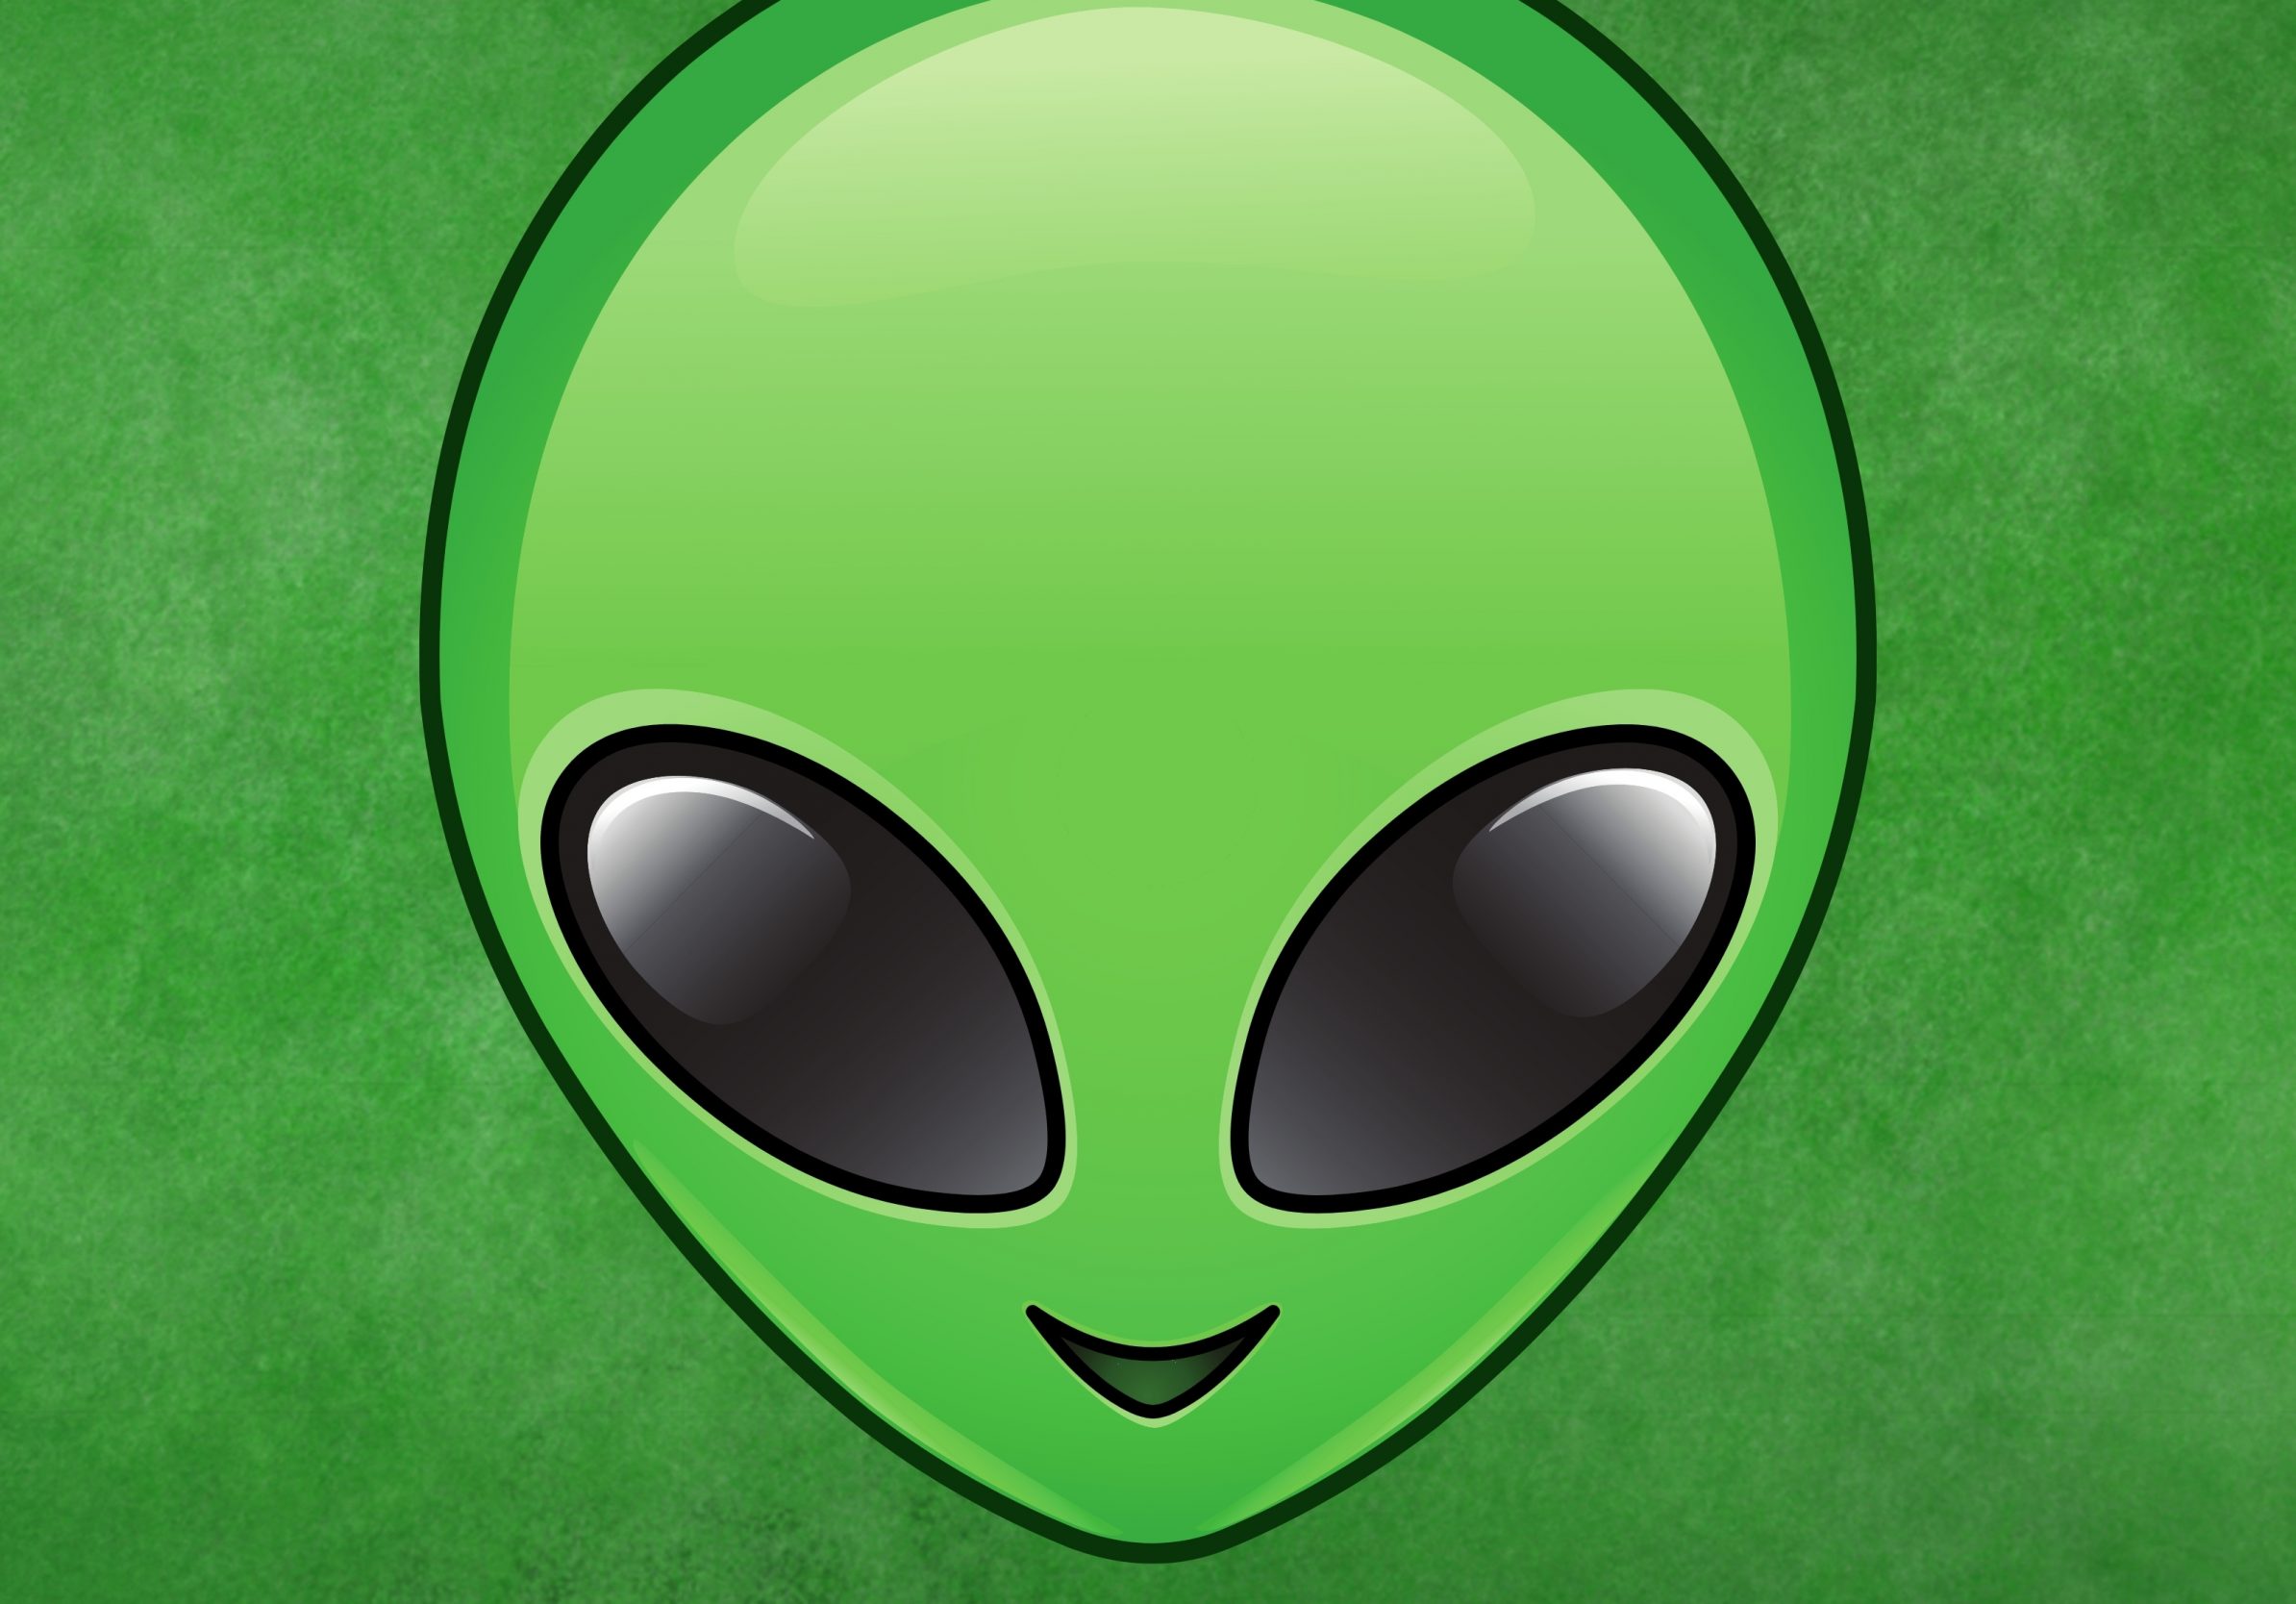 2388x1668 iPad Pro wallpapers Alien Emoji Face Invader Halloween Spaceship Green iPad Wallpaper 2388x1668 pixels resolution